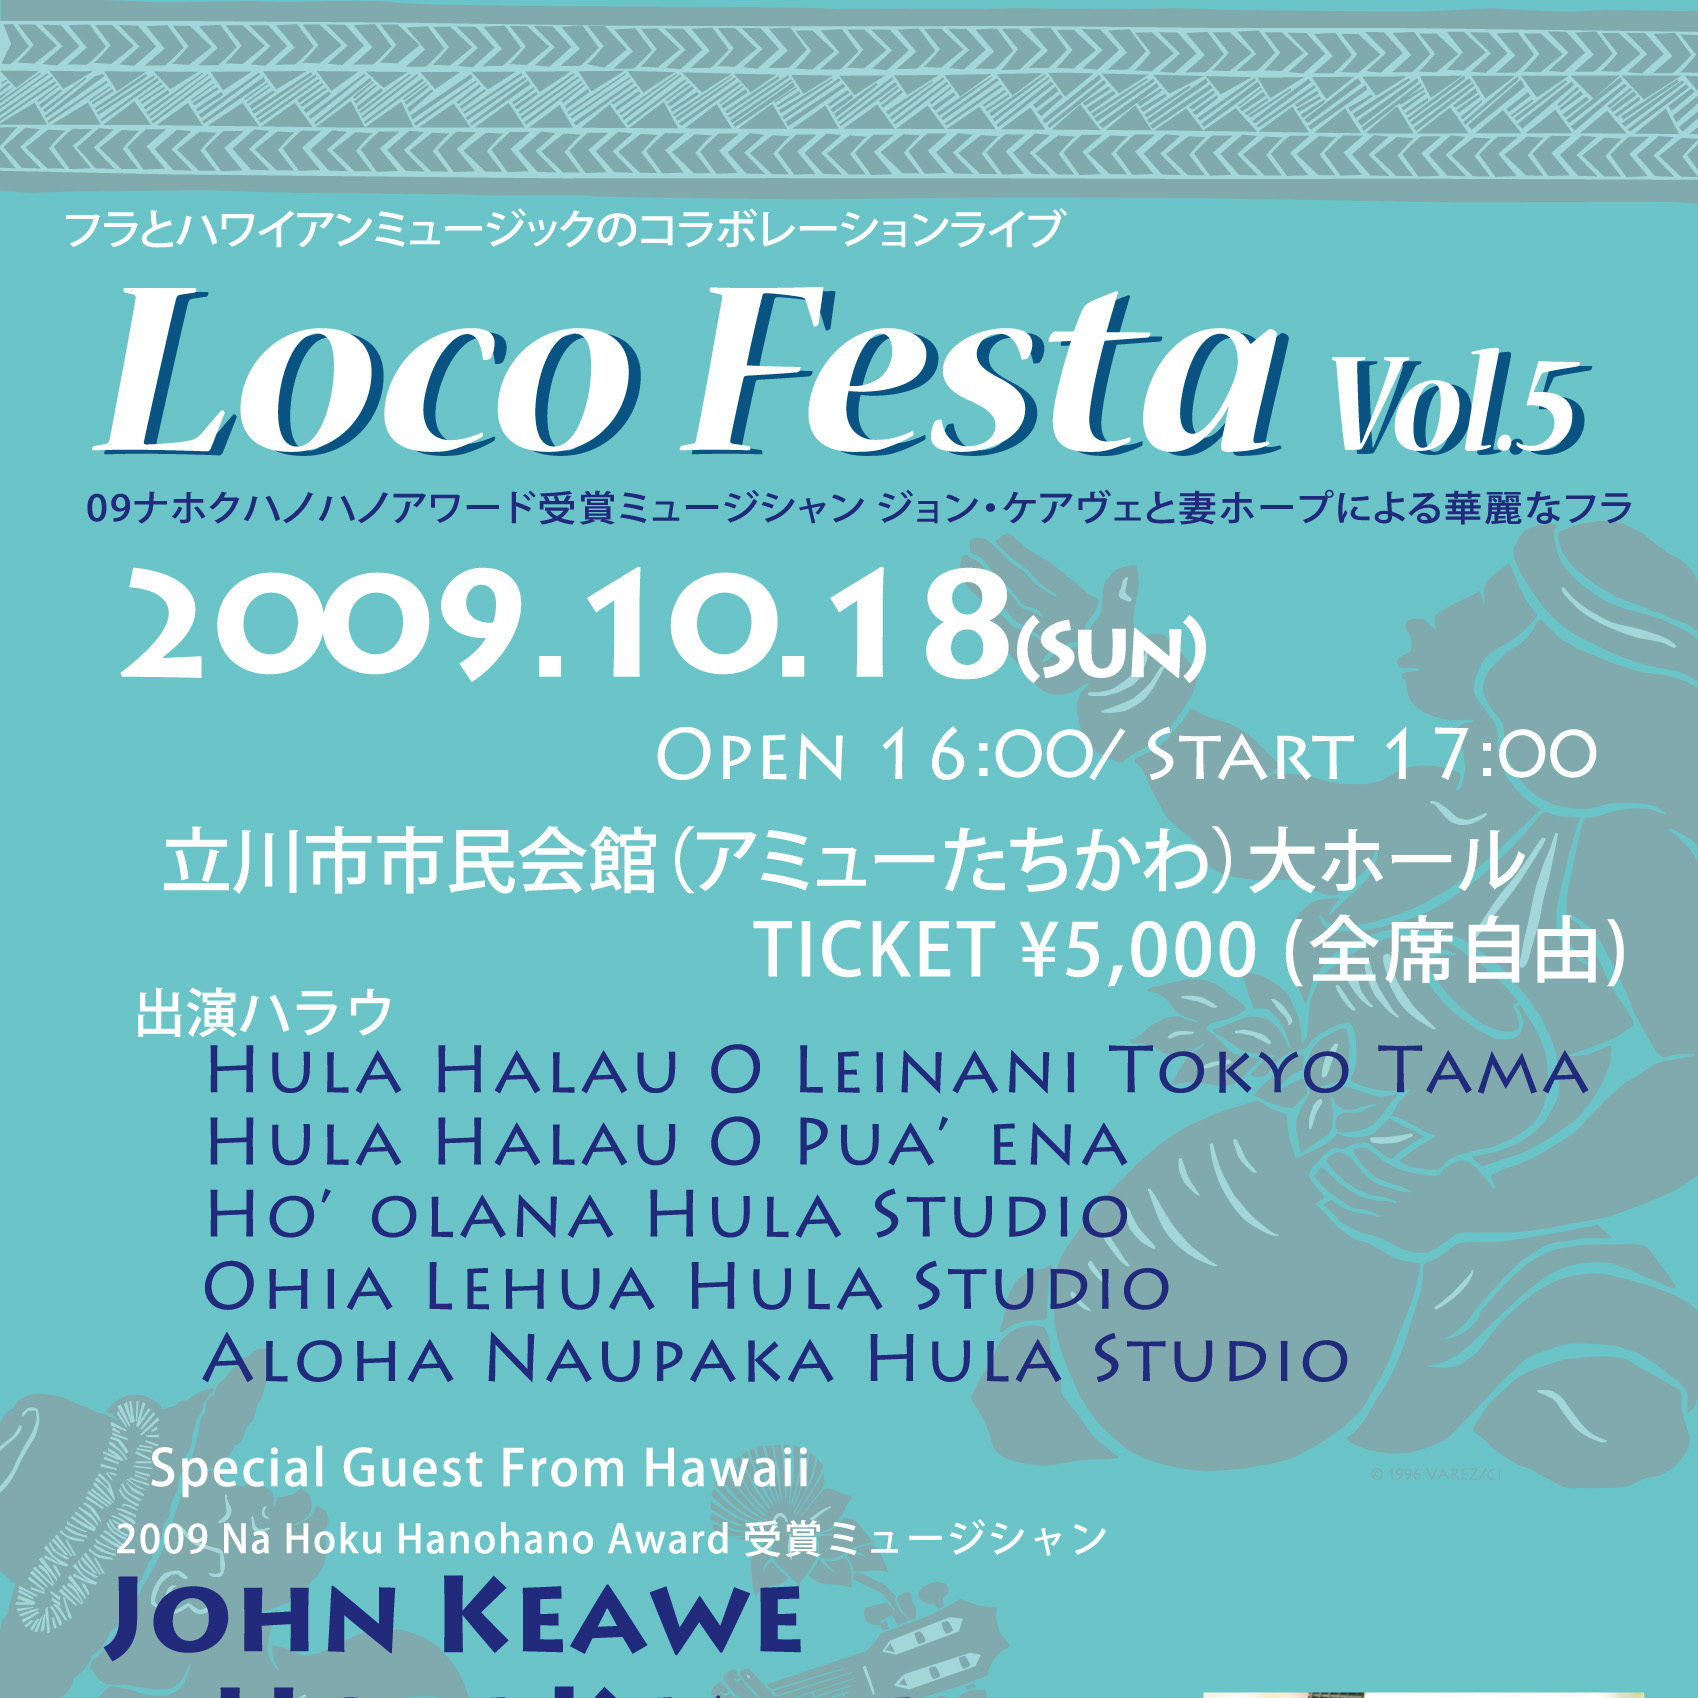 LocoFesta Vol.5 in アミュー立川